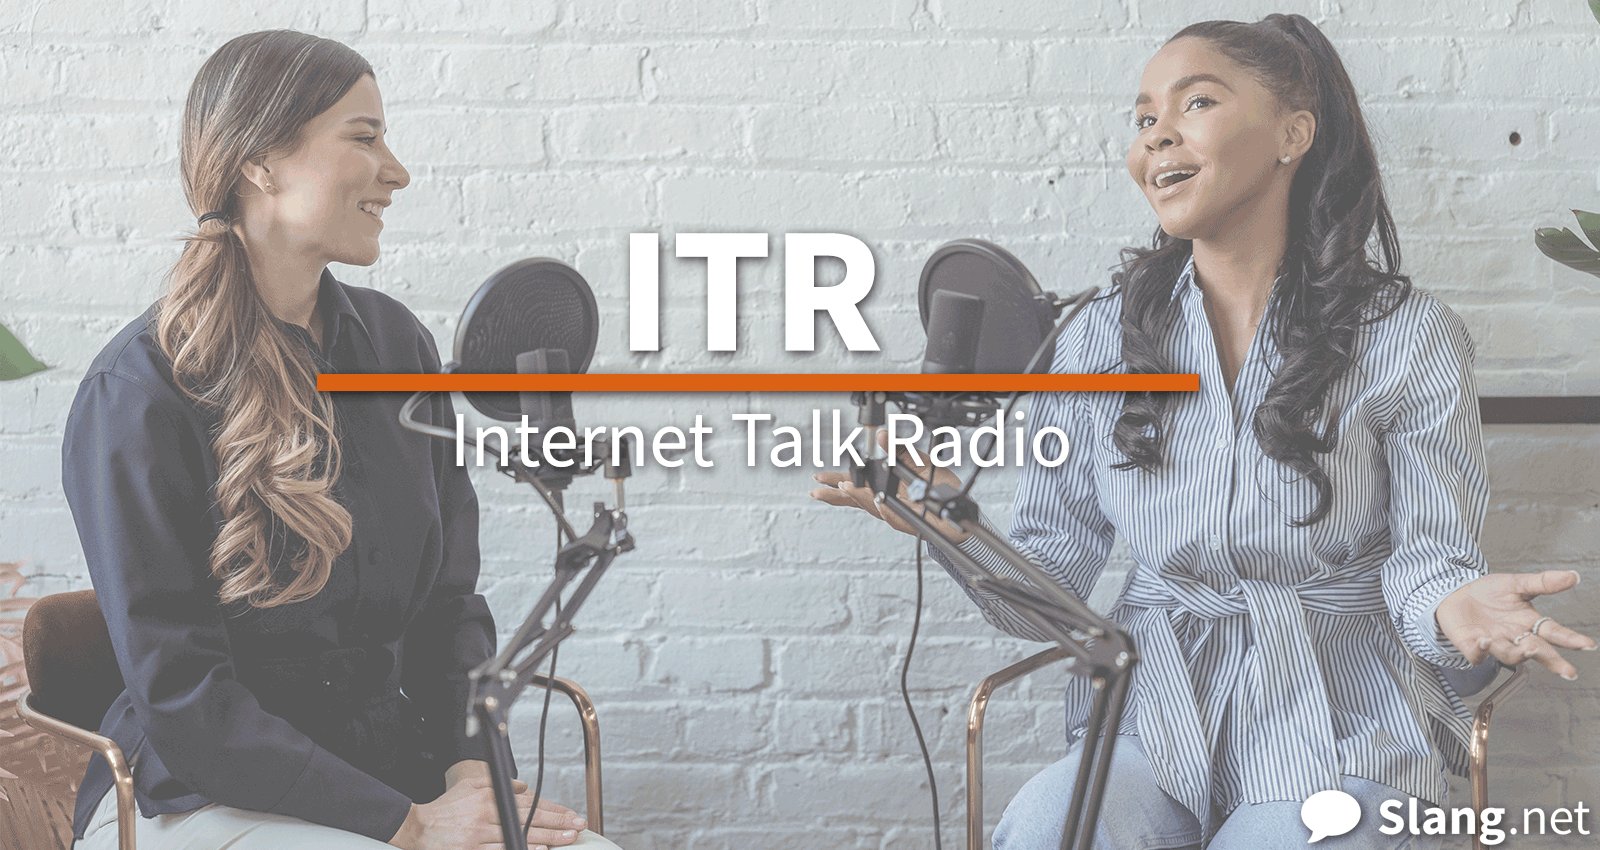 ITR stands for Internet Talk Radio